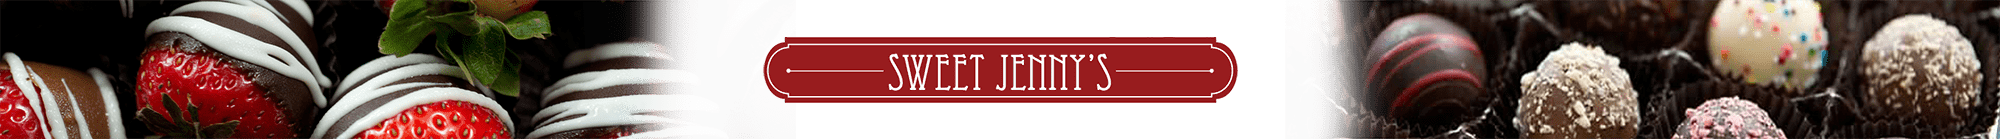 Sweet Jenny's Ice Cream Logo